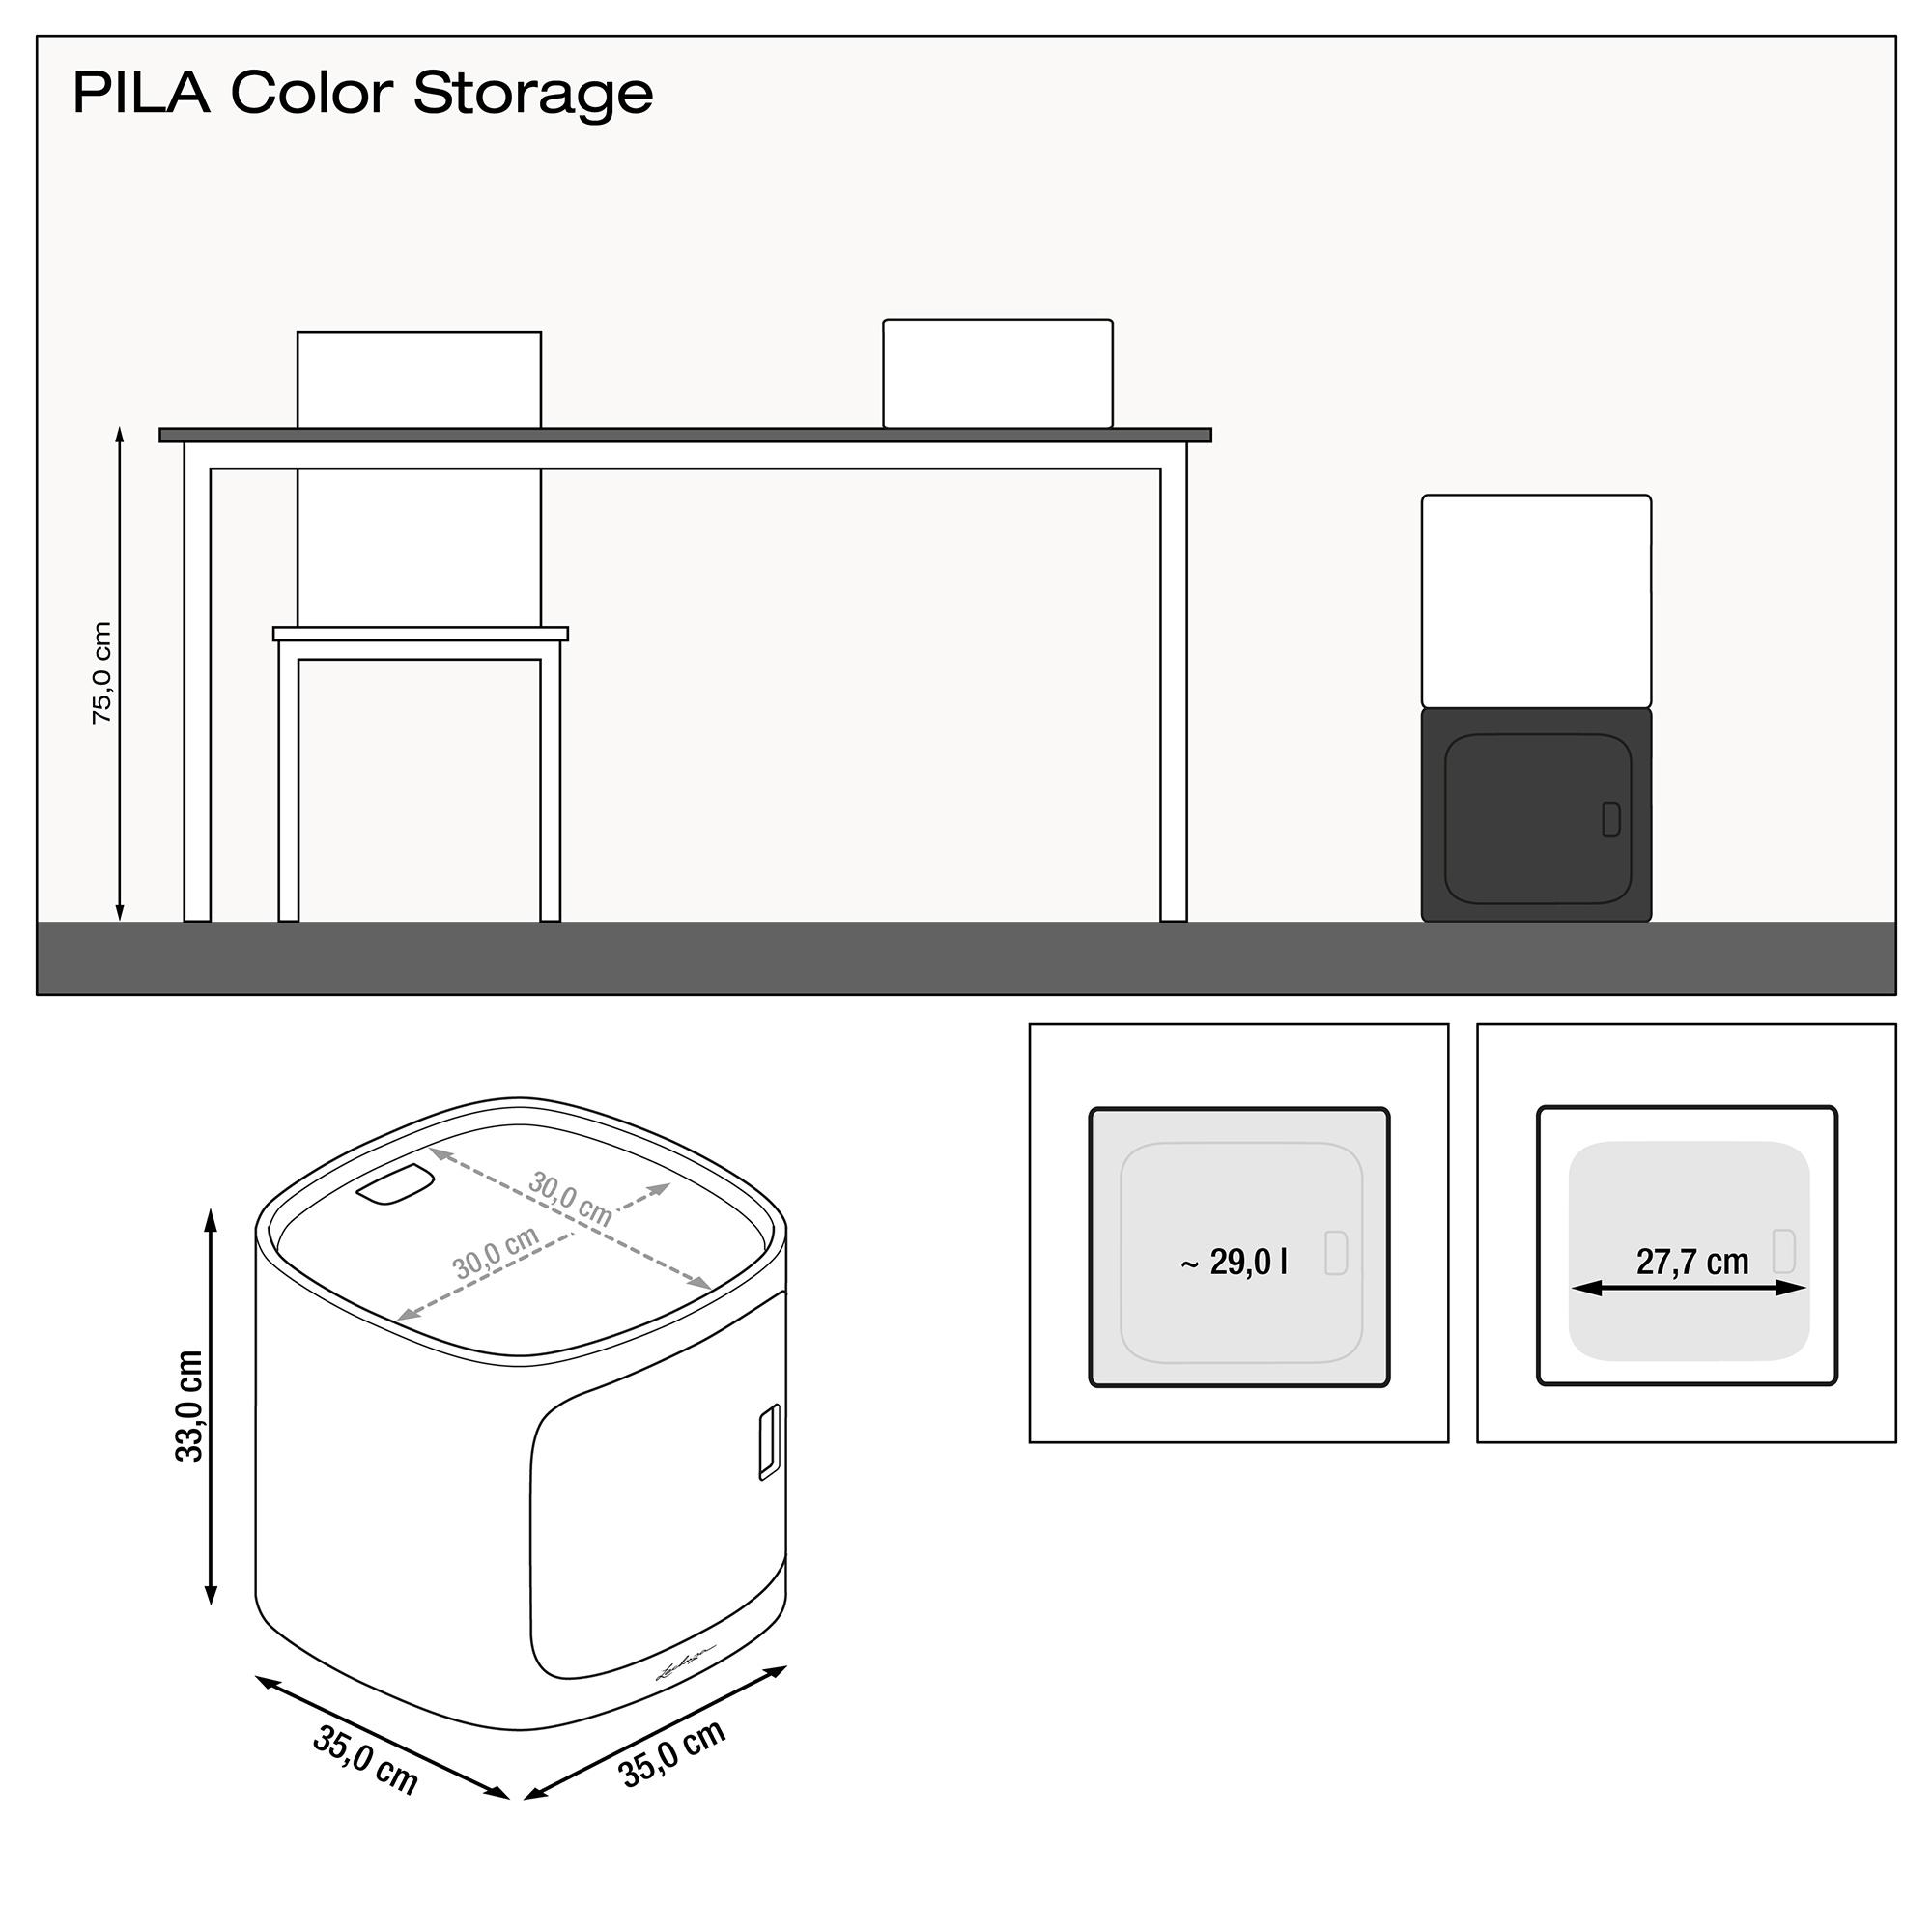 le_pila-color-storage35_product_addi_nz